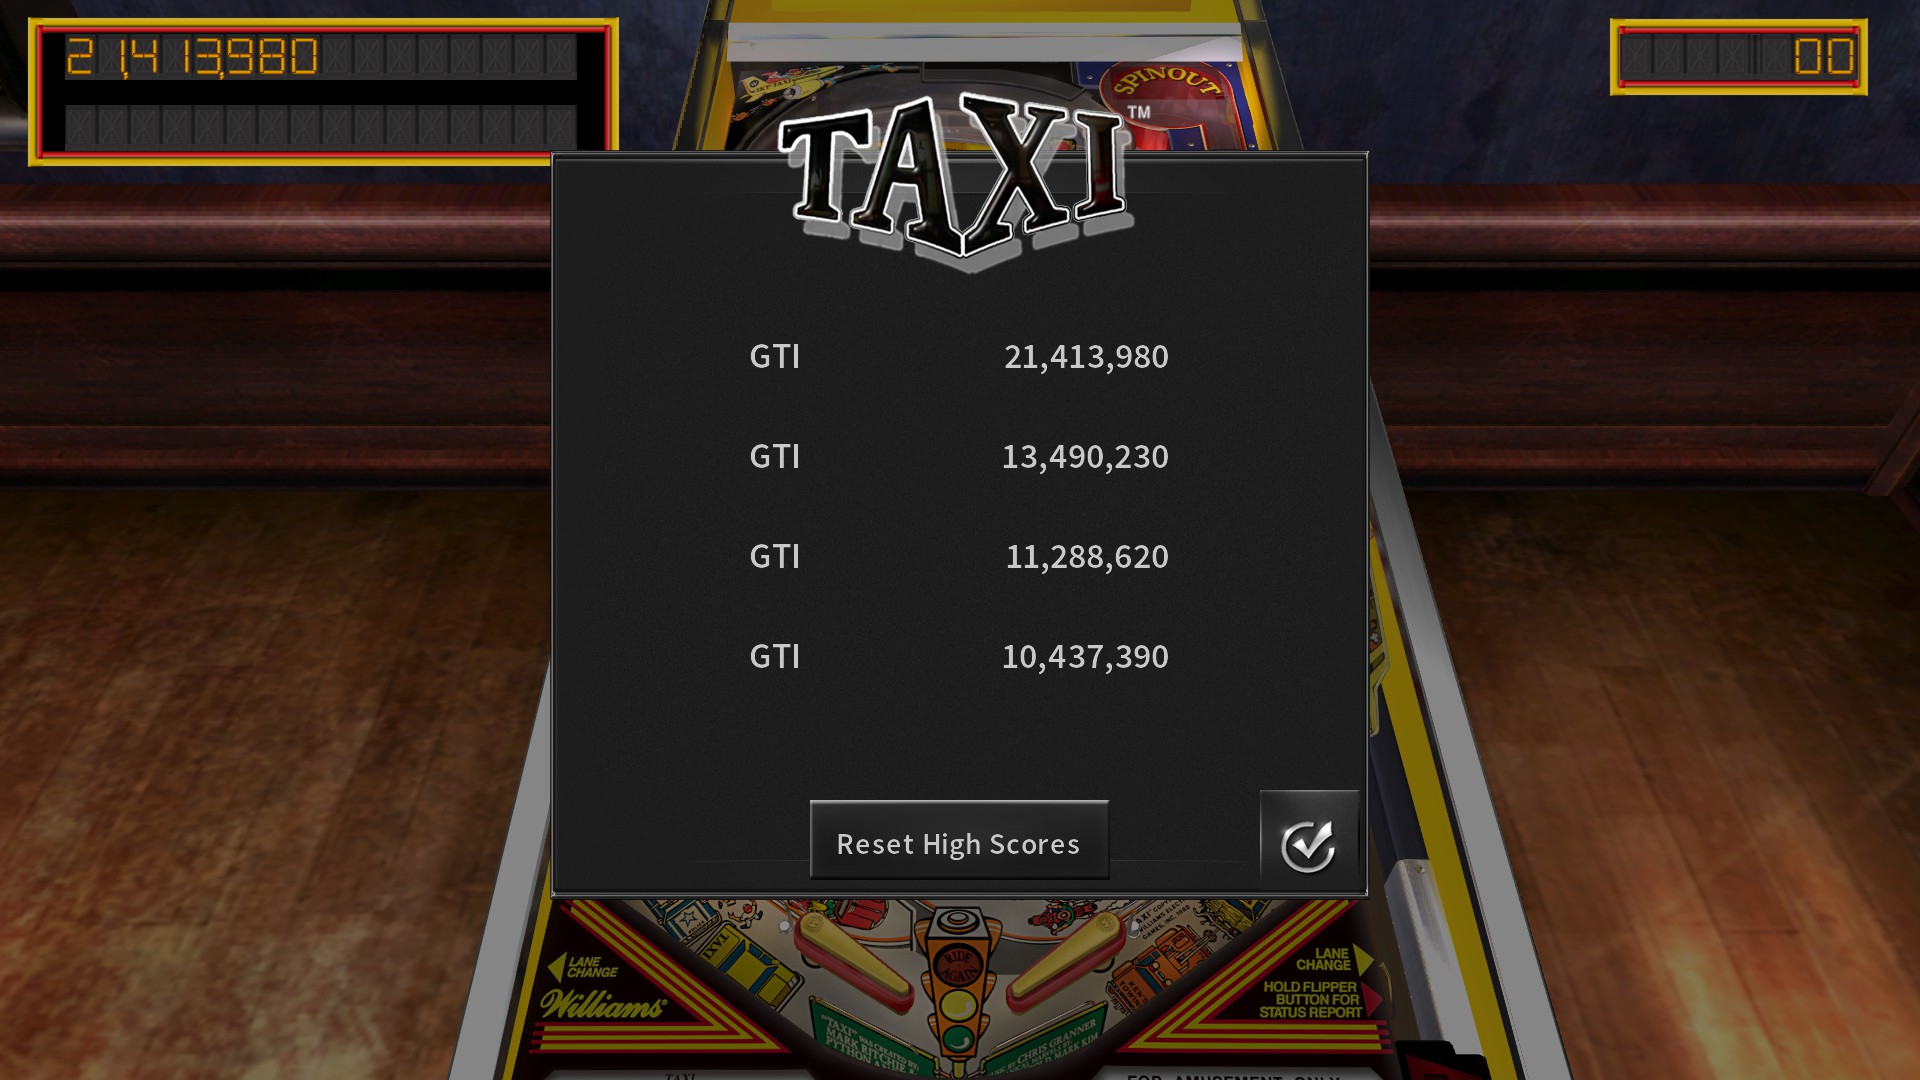 GTibel: Pinball Arcade: Taxi (PC) 21,413,980 points on 2020-07-17 03:41:17